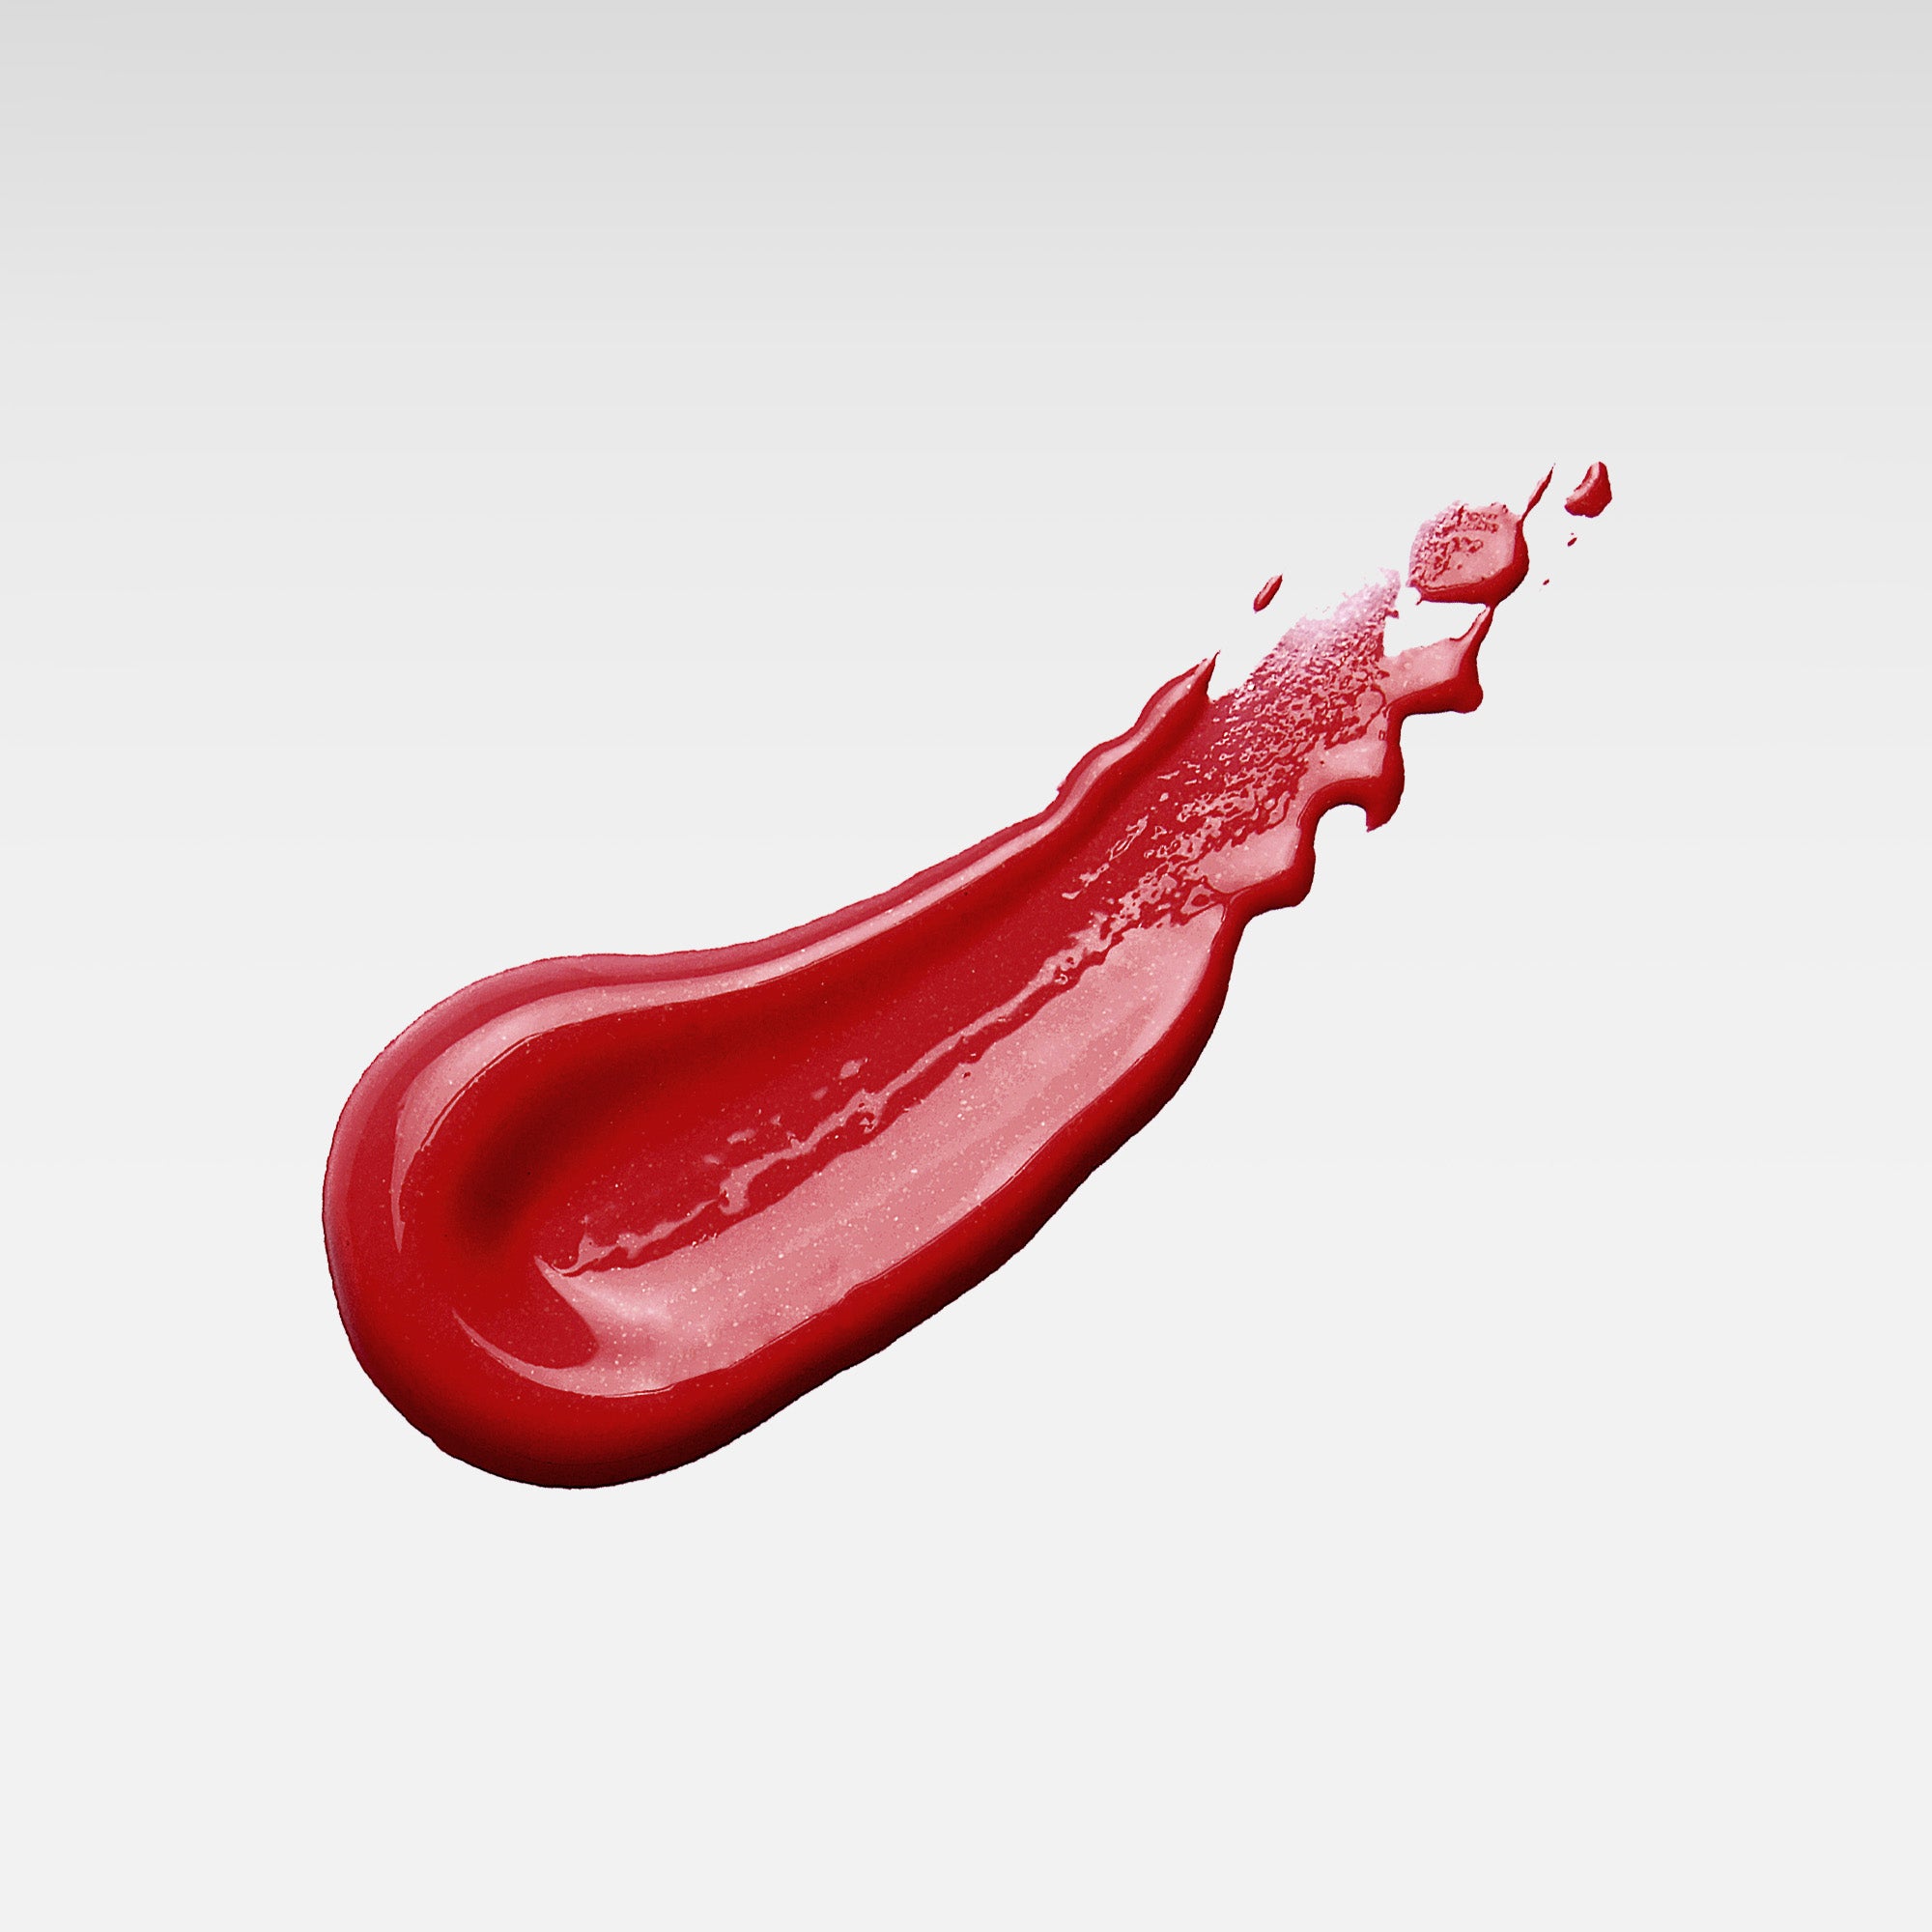 Trouble - Liquid Lipstick